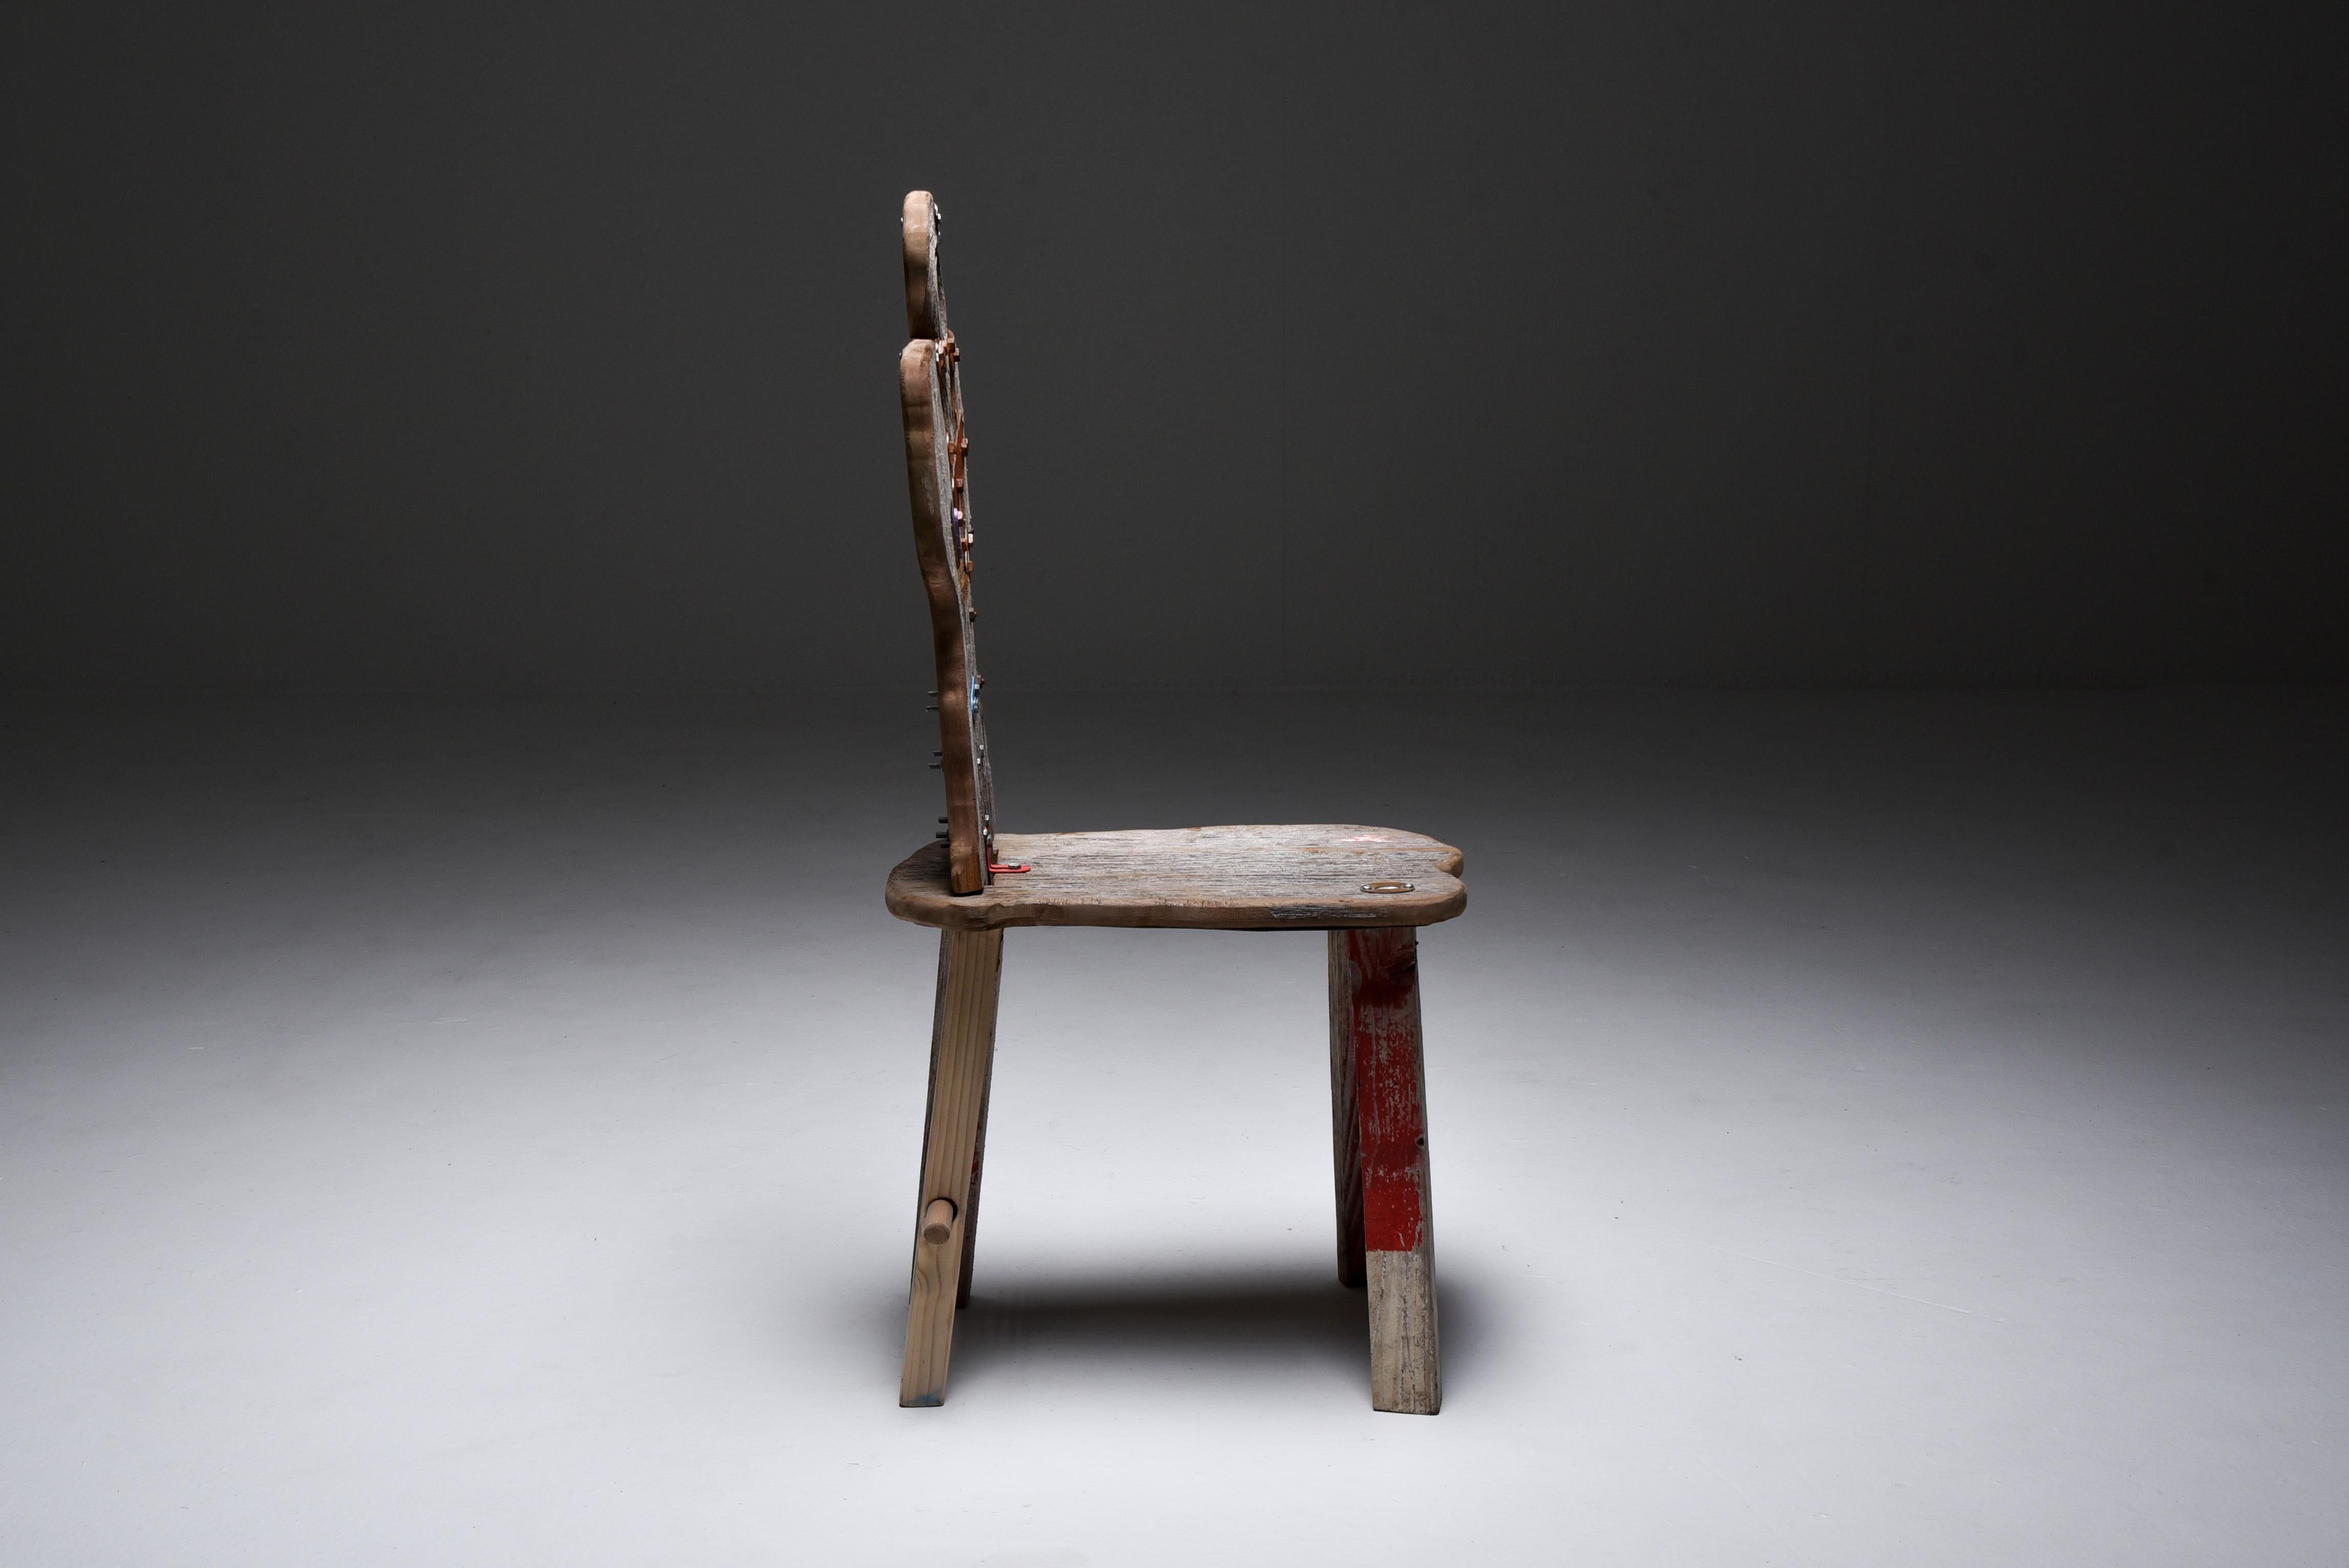 Serban Ionescu; Folks series; Functional art; Sculpture chair; Armchair; Sidechair; Conversation piece; Art;
Folks 31, 2021

This unique piece was on view in the exhibition 